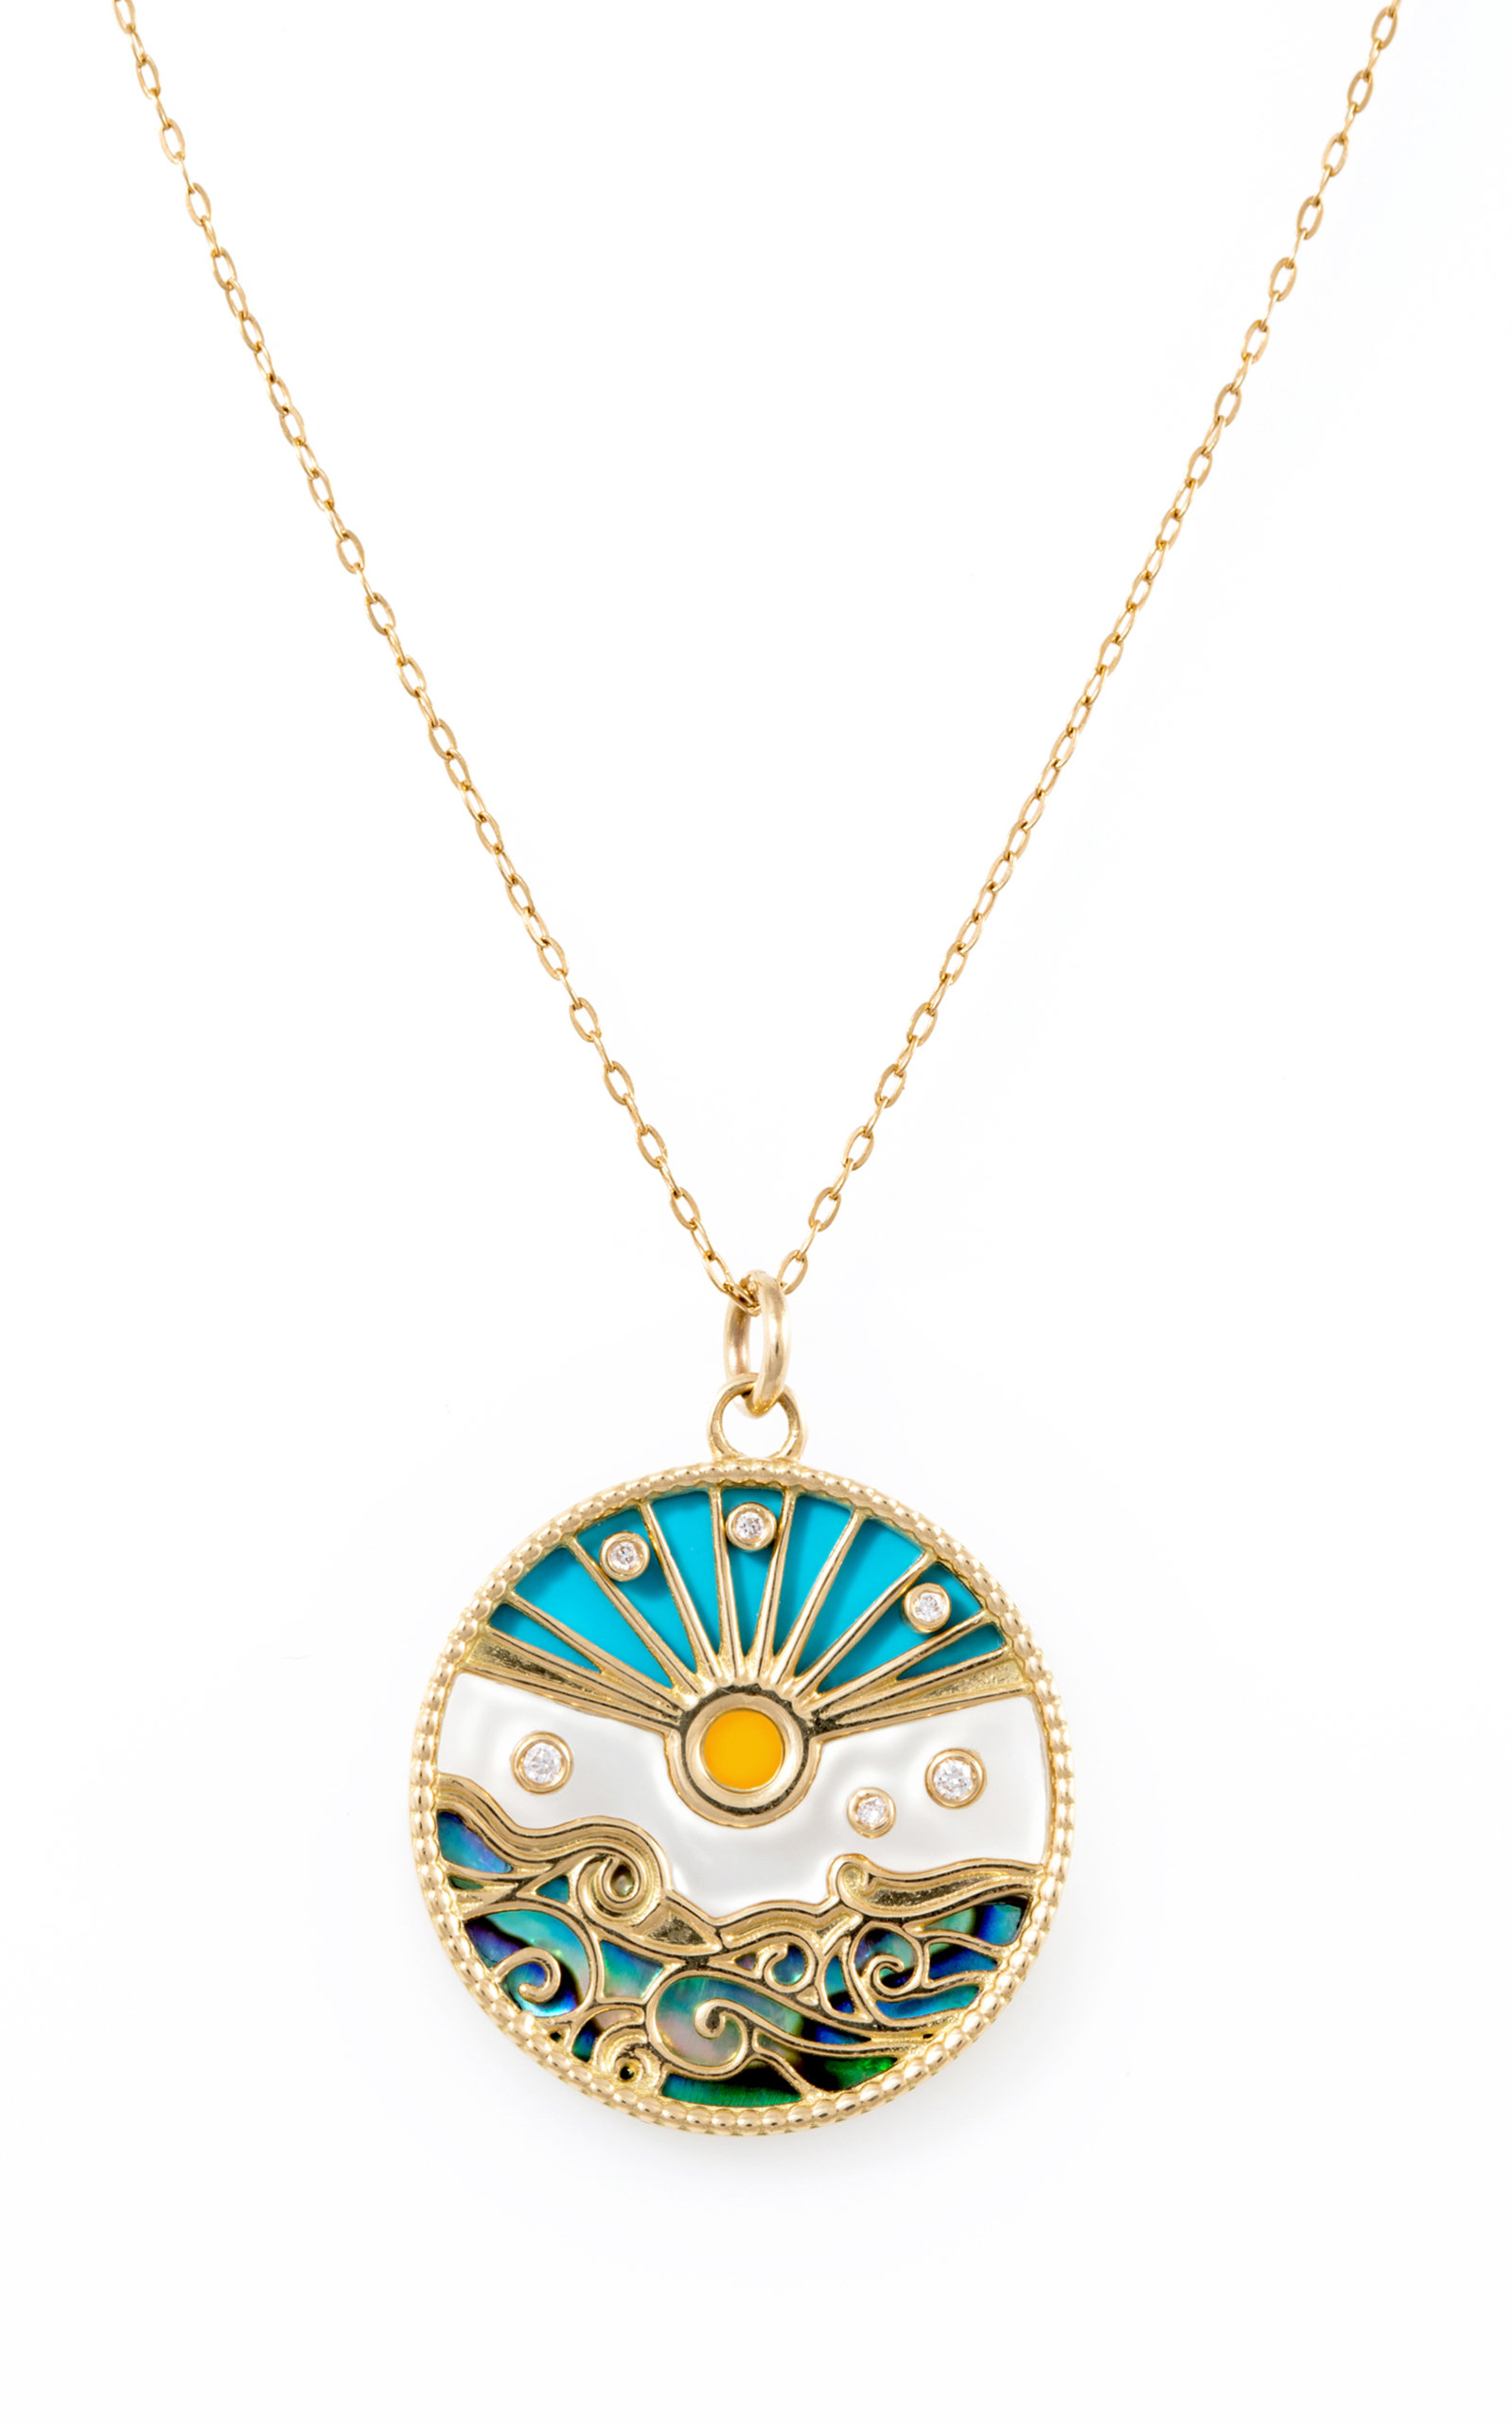 L'Atelier Nawbar Women's Love Summer 18K Yellow Gold Pendant Necklace